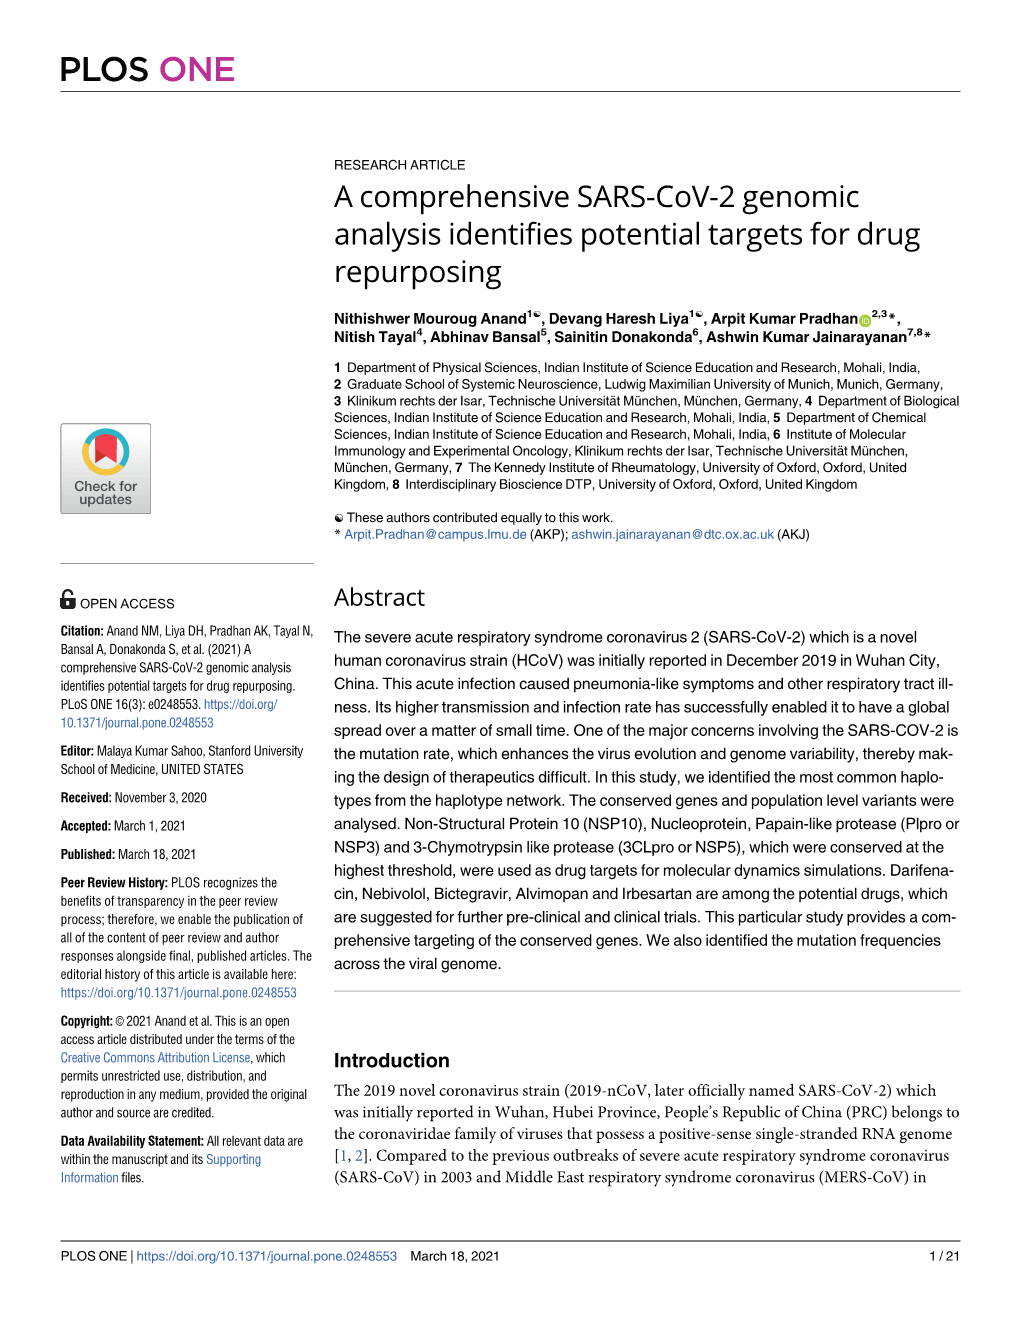 A Comprehensive SARS-Cov-2 Genomic Analysis Identifies Potential Targets for Drug Repurposing